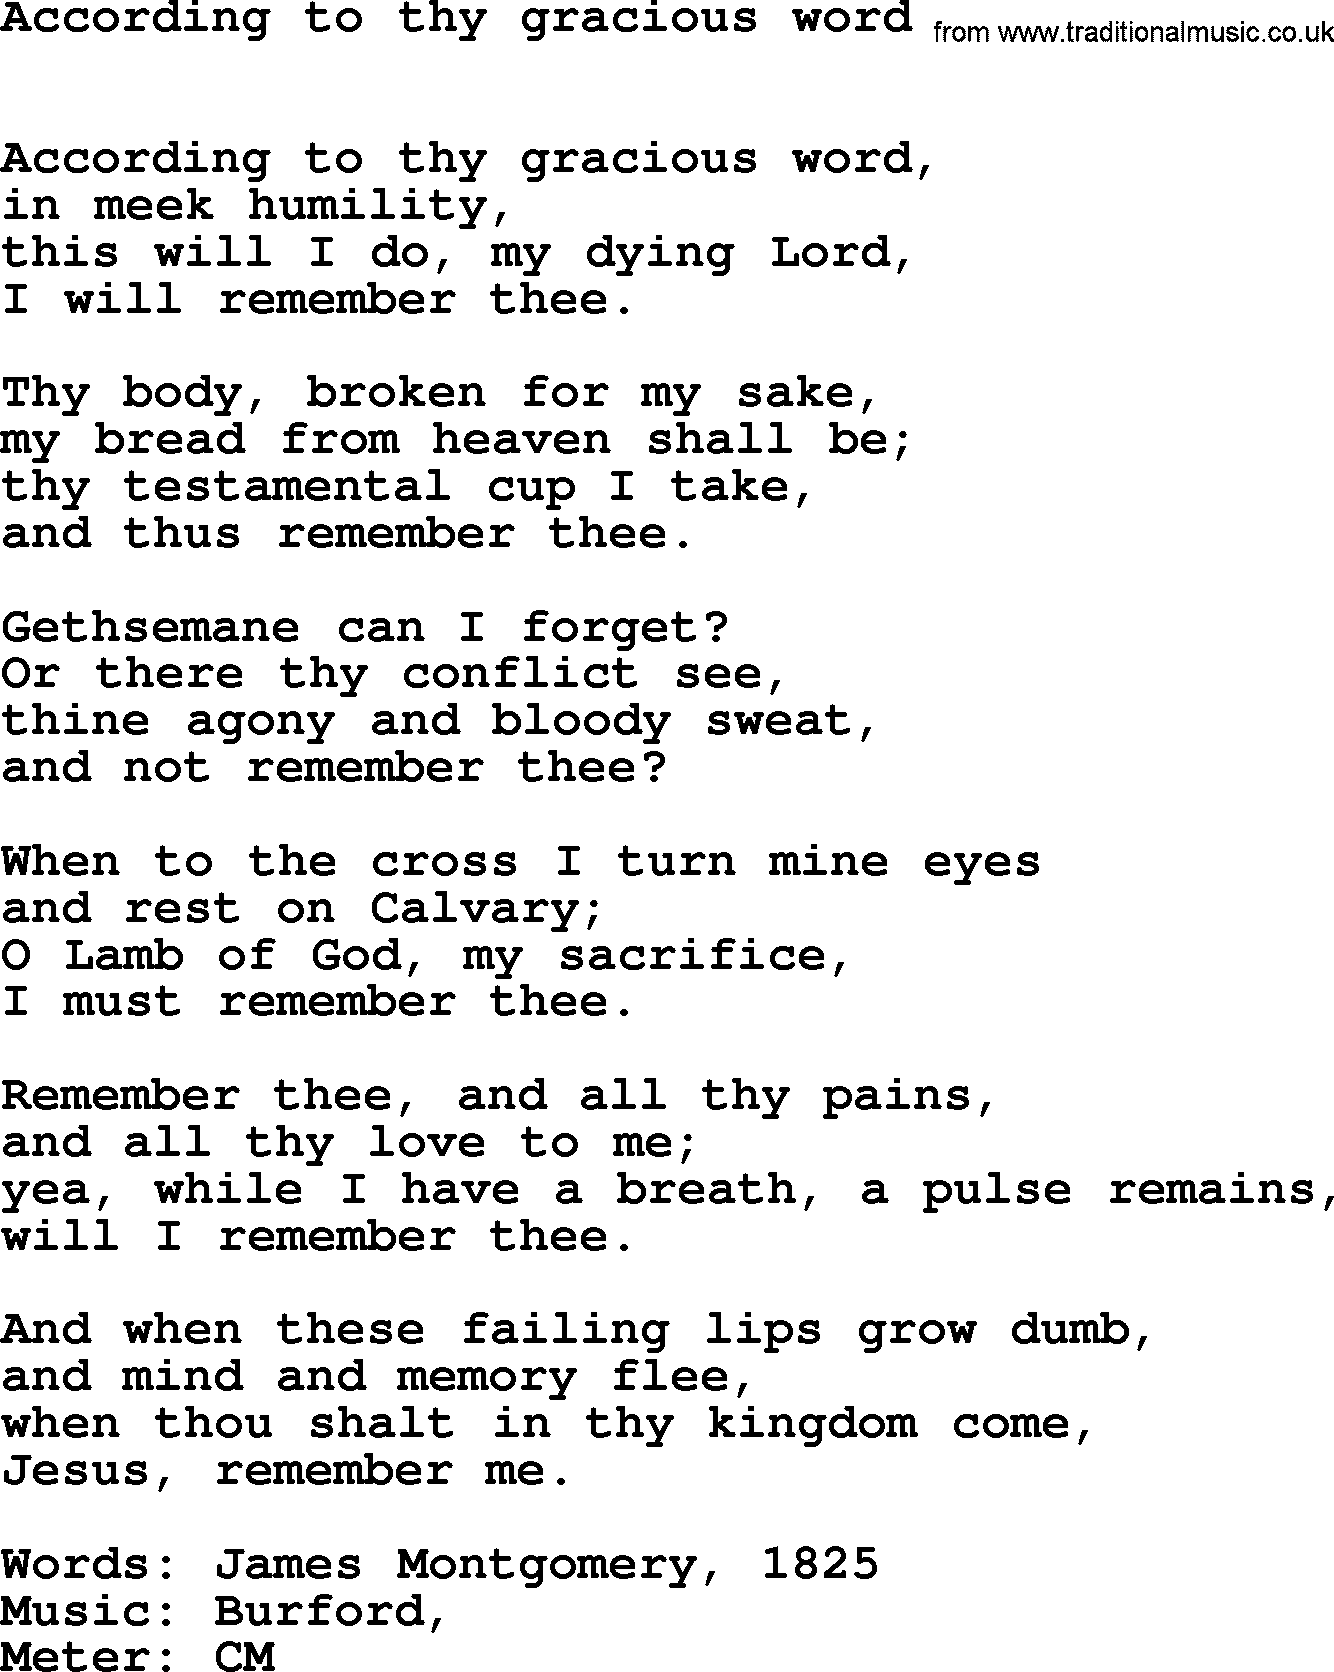 Book of Common Praise Hymn: According To Thy Gracious Word.txt lyrics with midi music